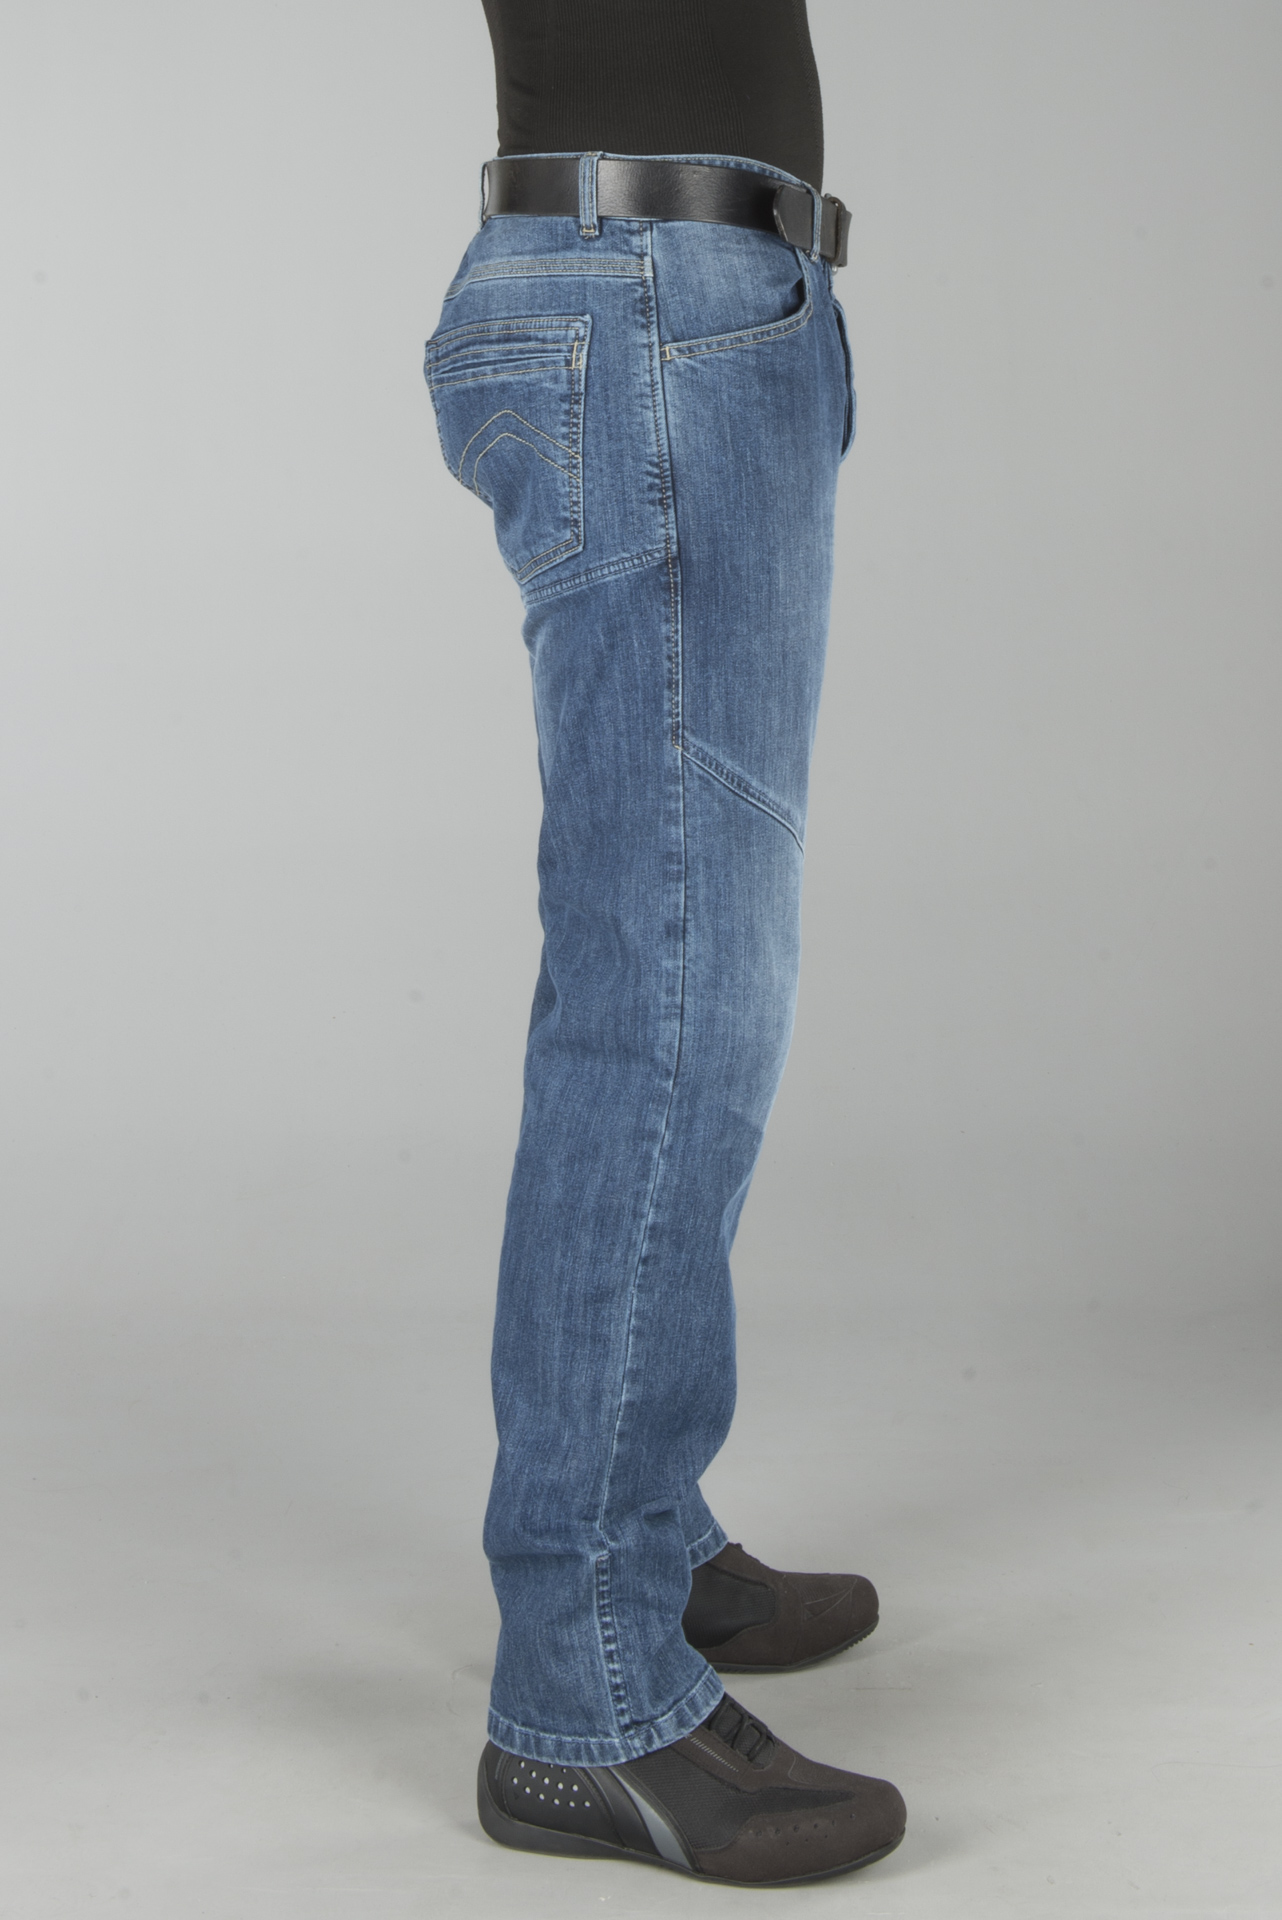 dainese tivoli jeans